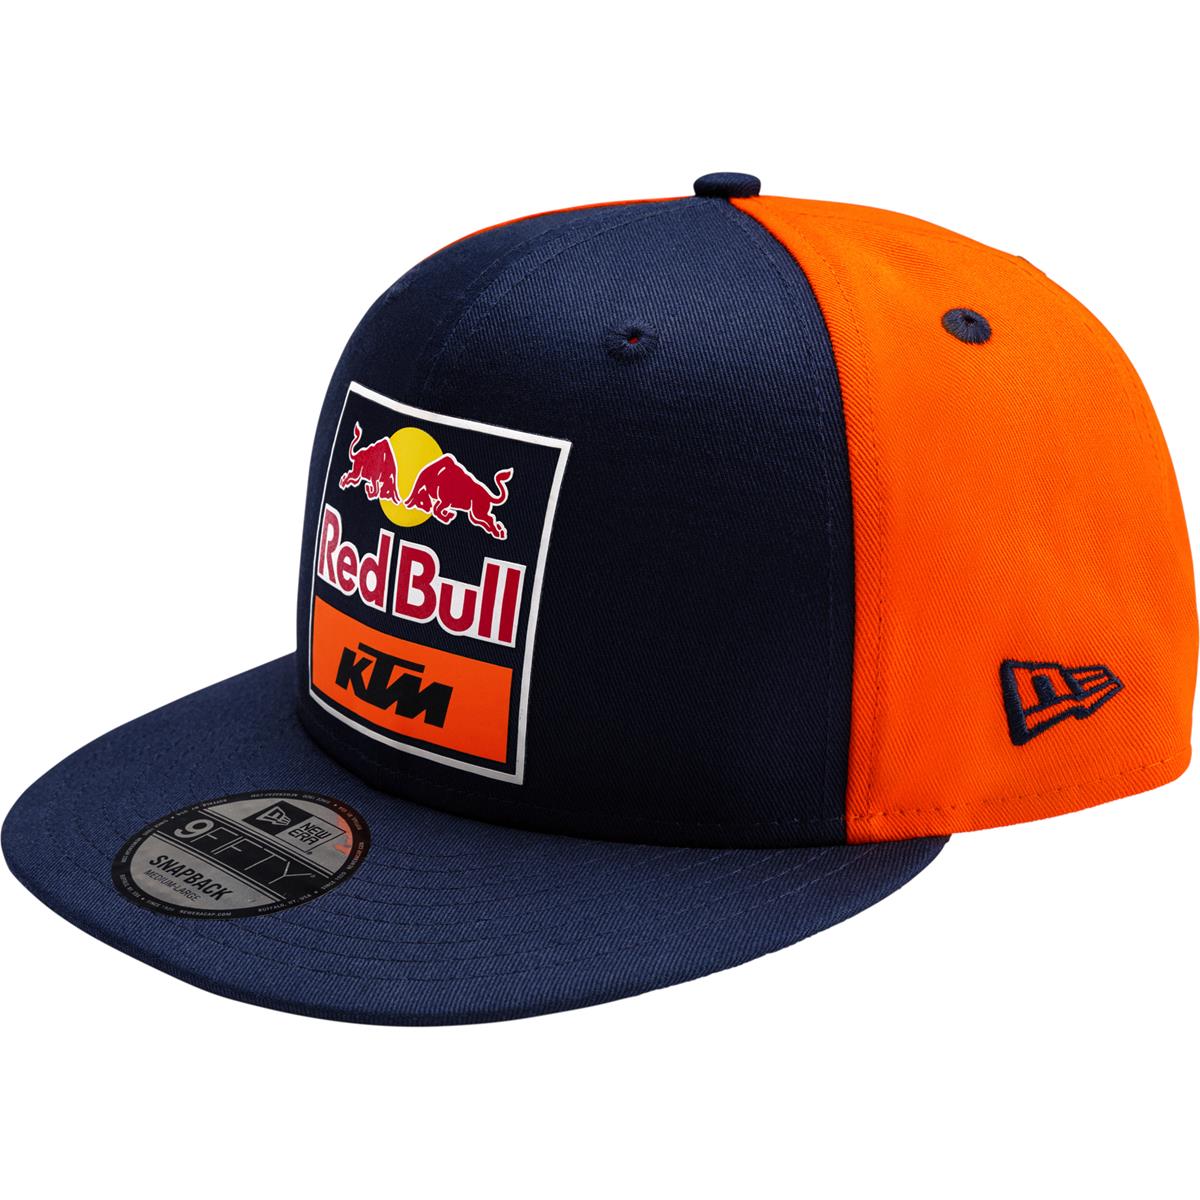 Red Bull Snapback Cap KTM Official Teamline Replica - Flat - Navy/Orange